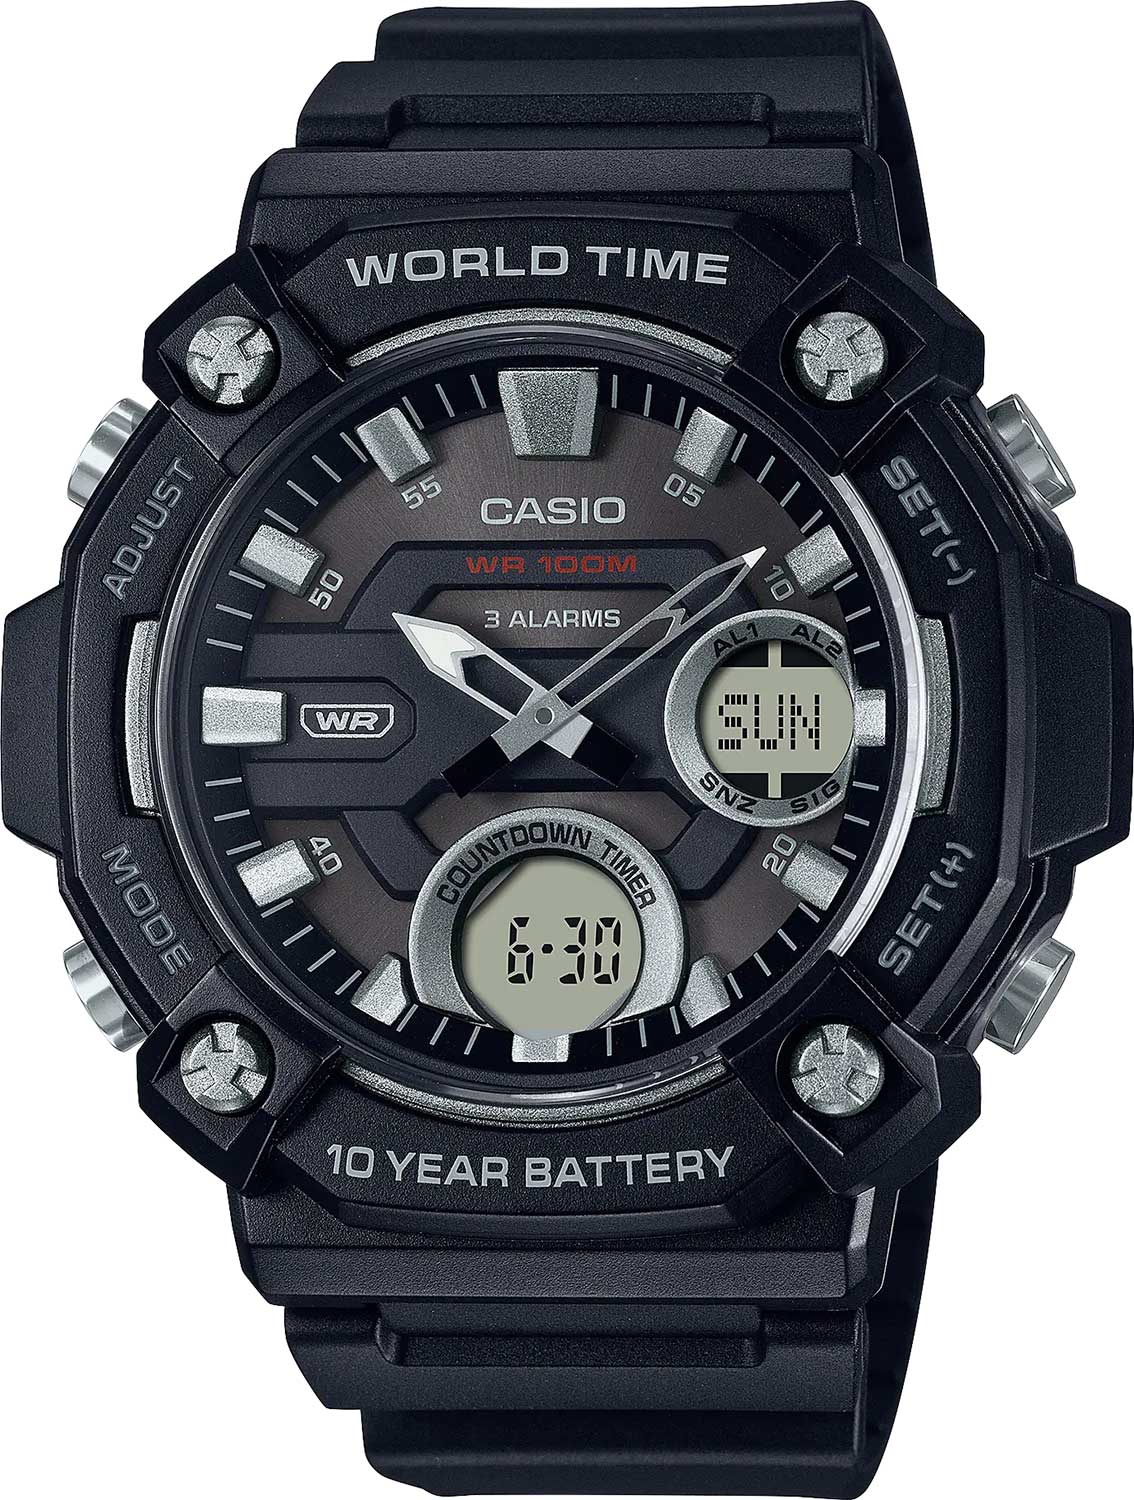 Наручные часы Casio AEQ-120W-1A наручные часы casio ws 1400h 1a